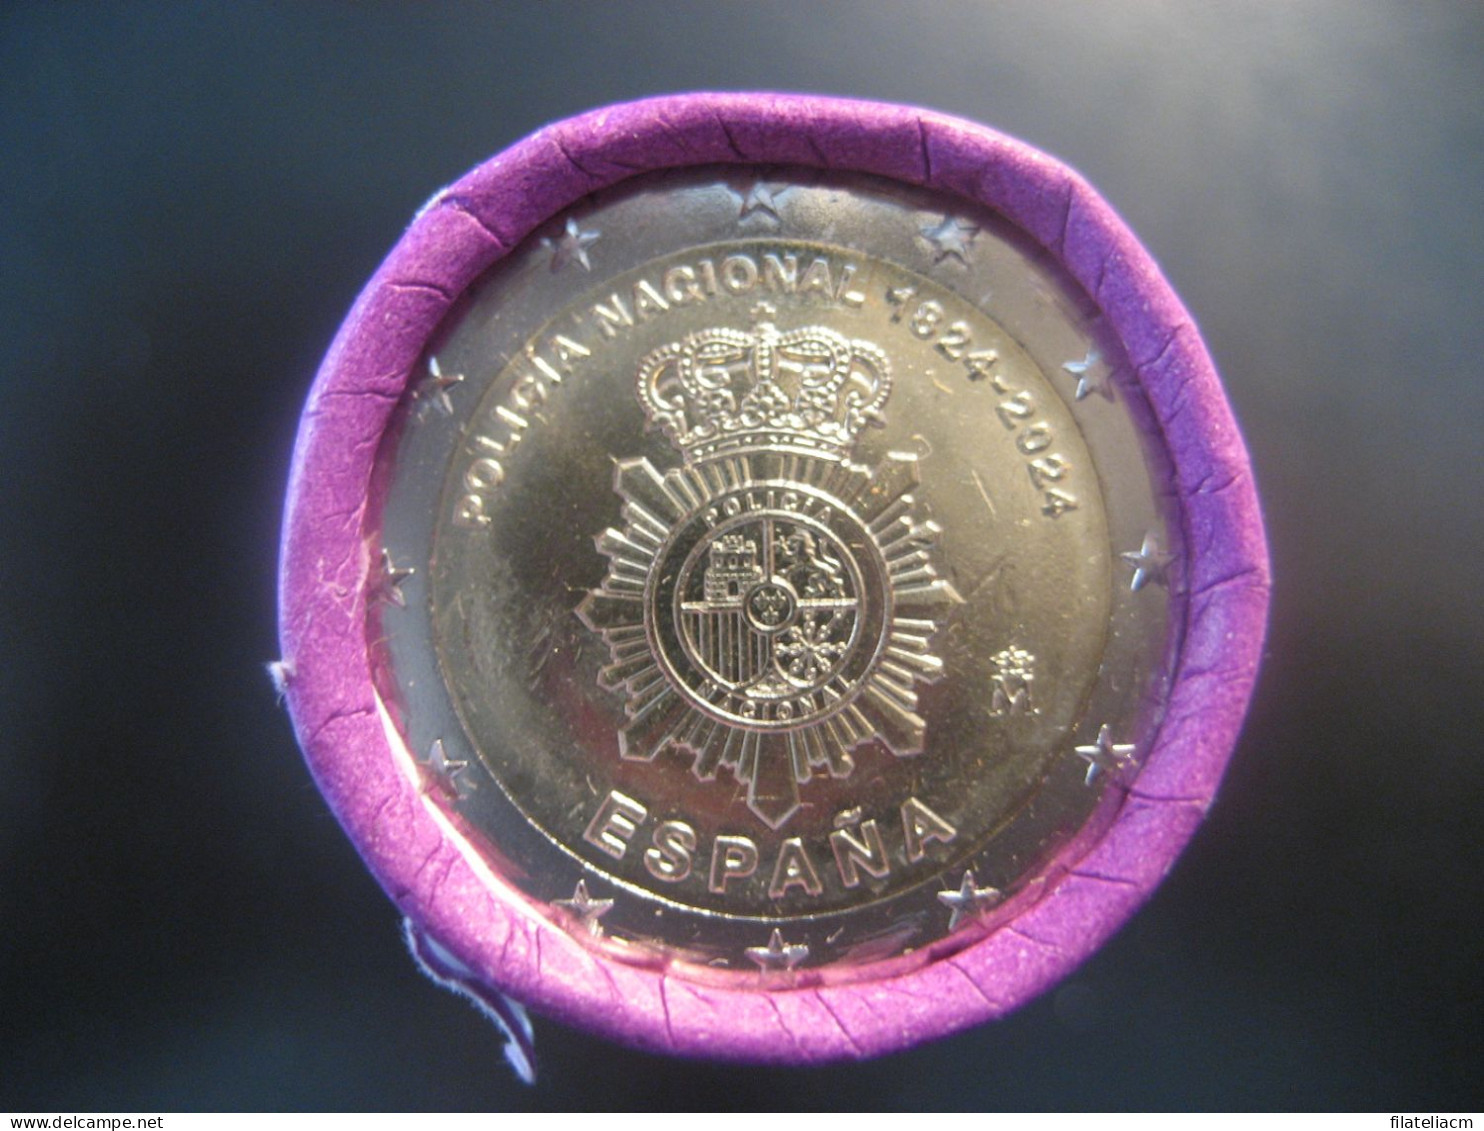 2 EUR 2024 SPAIN Policia Nacional POLICE Uncirculated From Cartridge Euro Coin - Spanje